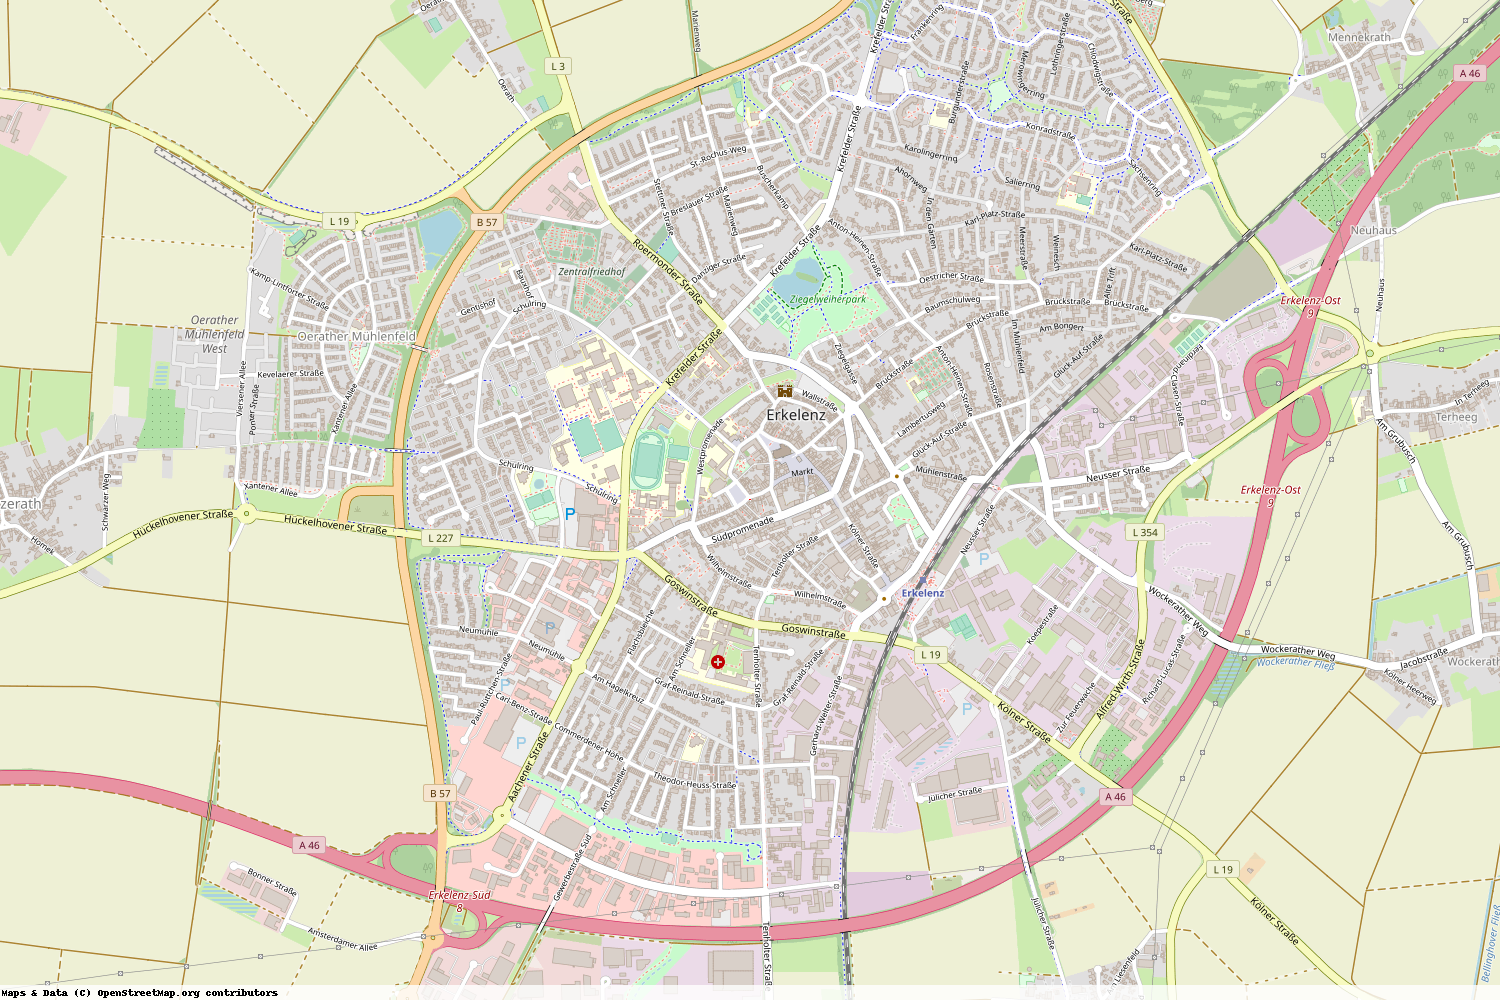 Ist gerade Stromausfall in Nordrhein-Westfalen - Heinsberg - Erkelenz?